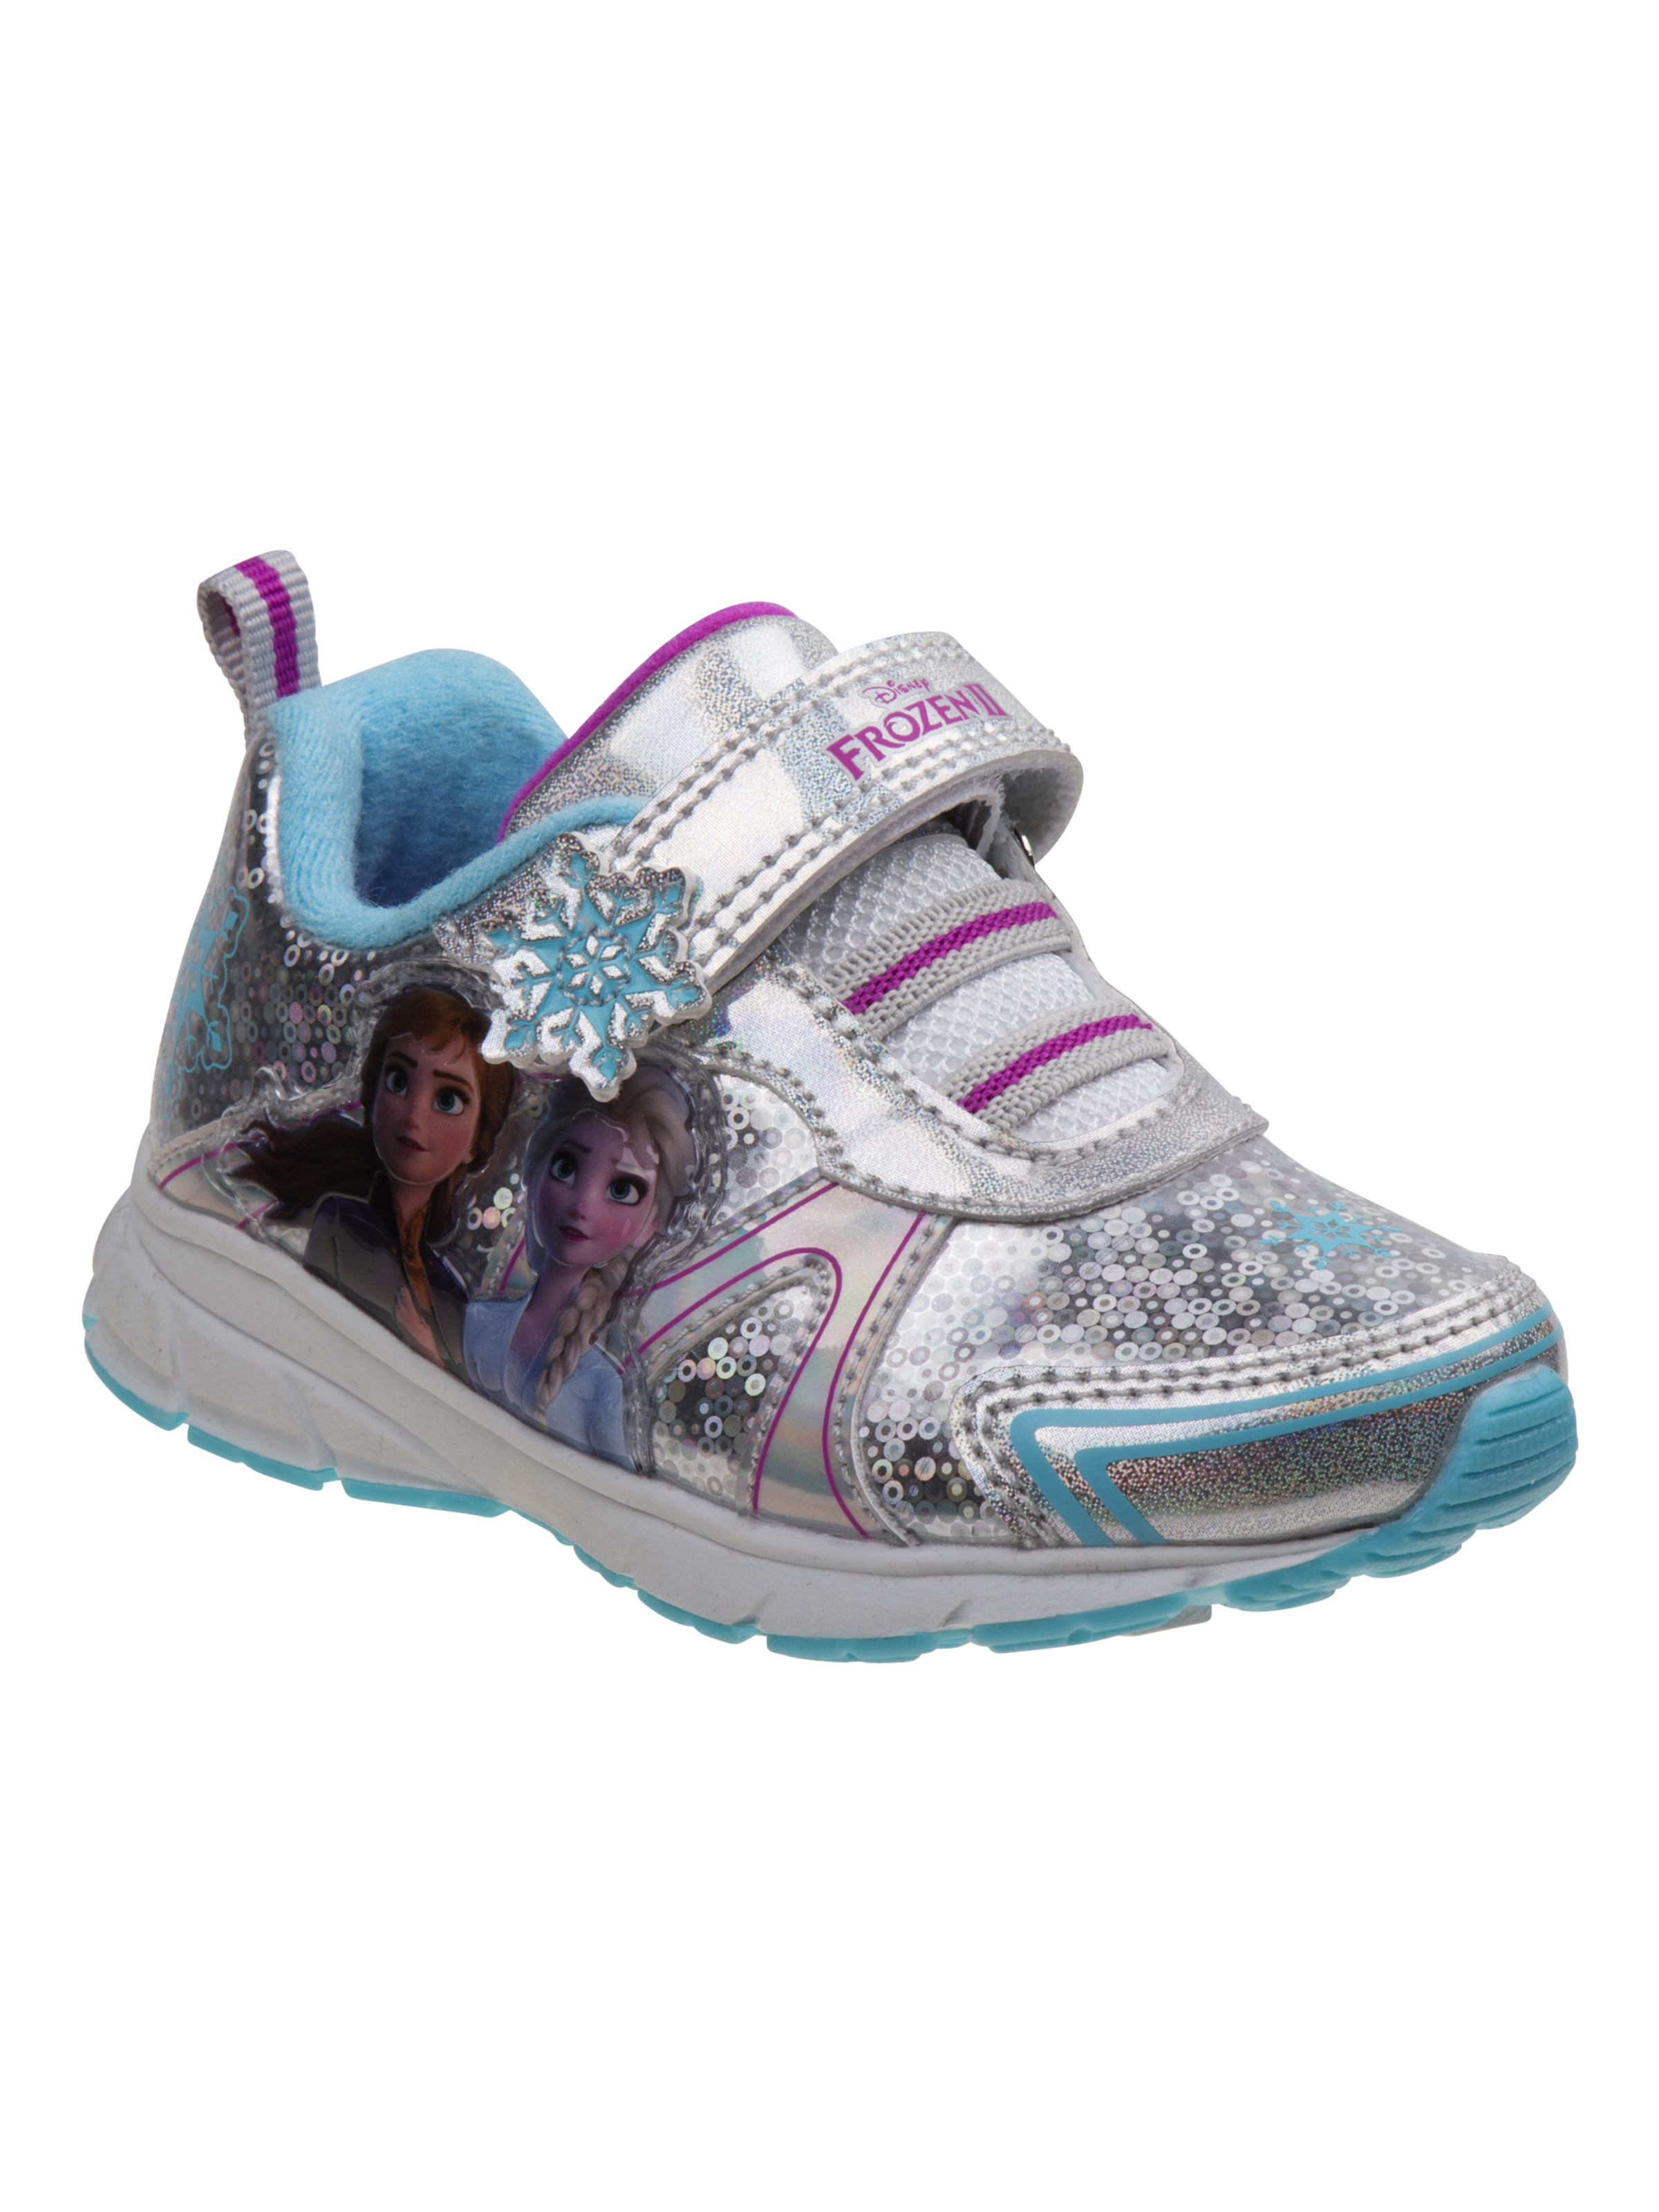 iridescent glitter shoes